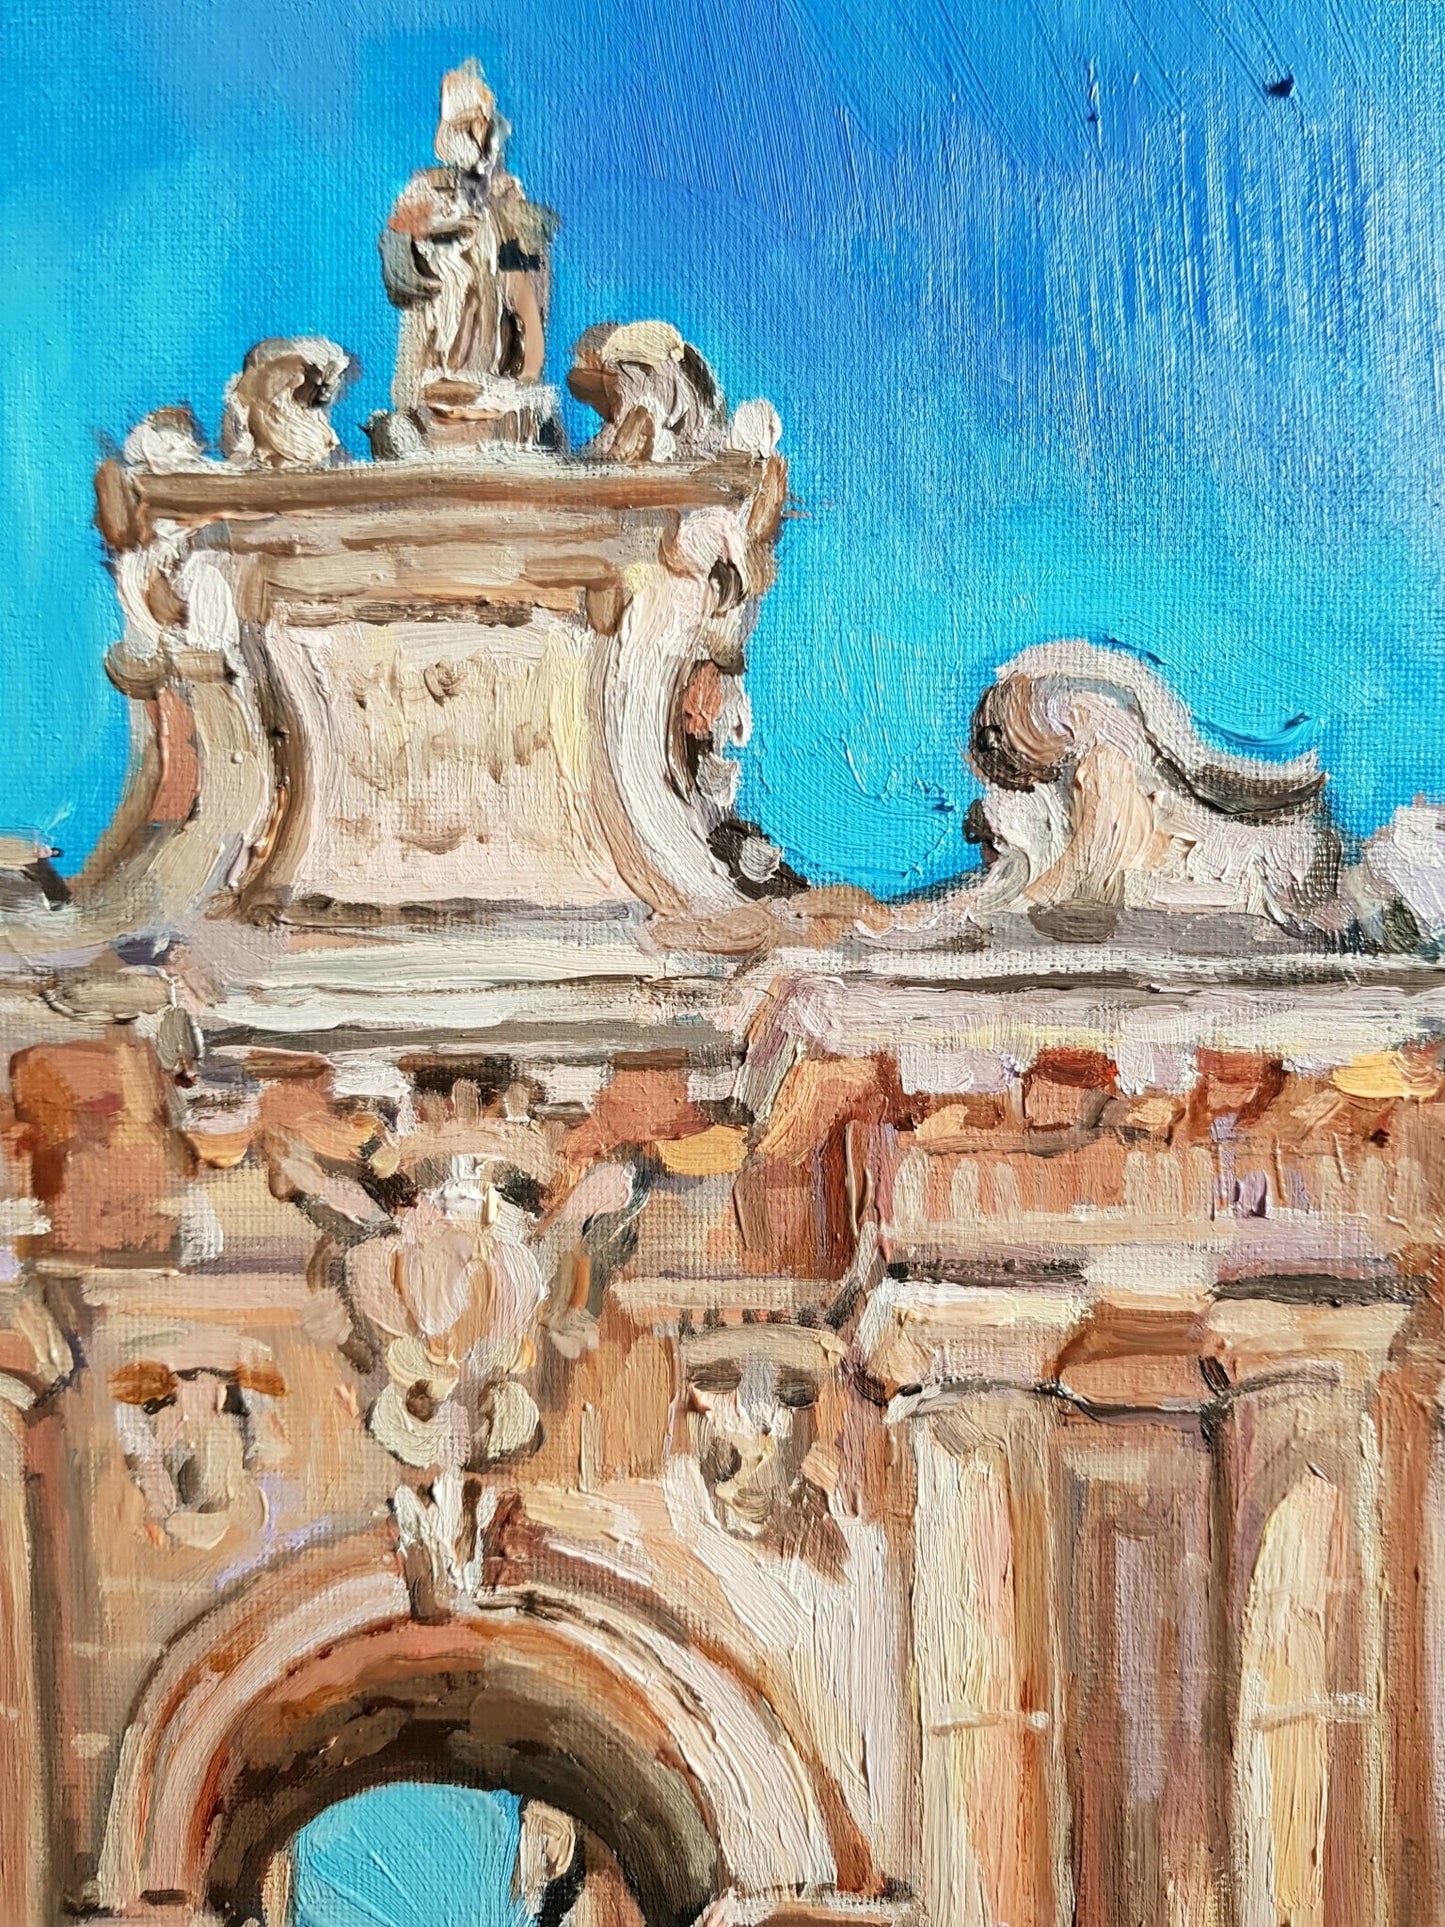 Porta San Biaggio, Lecce | Original Painting Original Paintings Harriet Lawless Artist italy